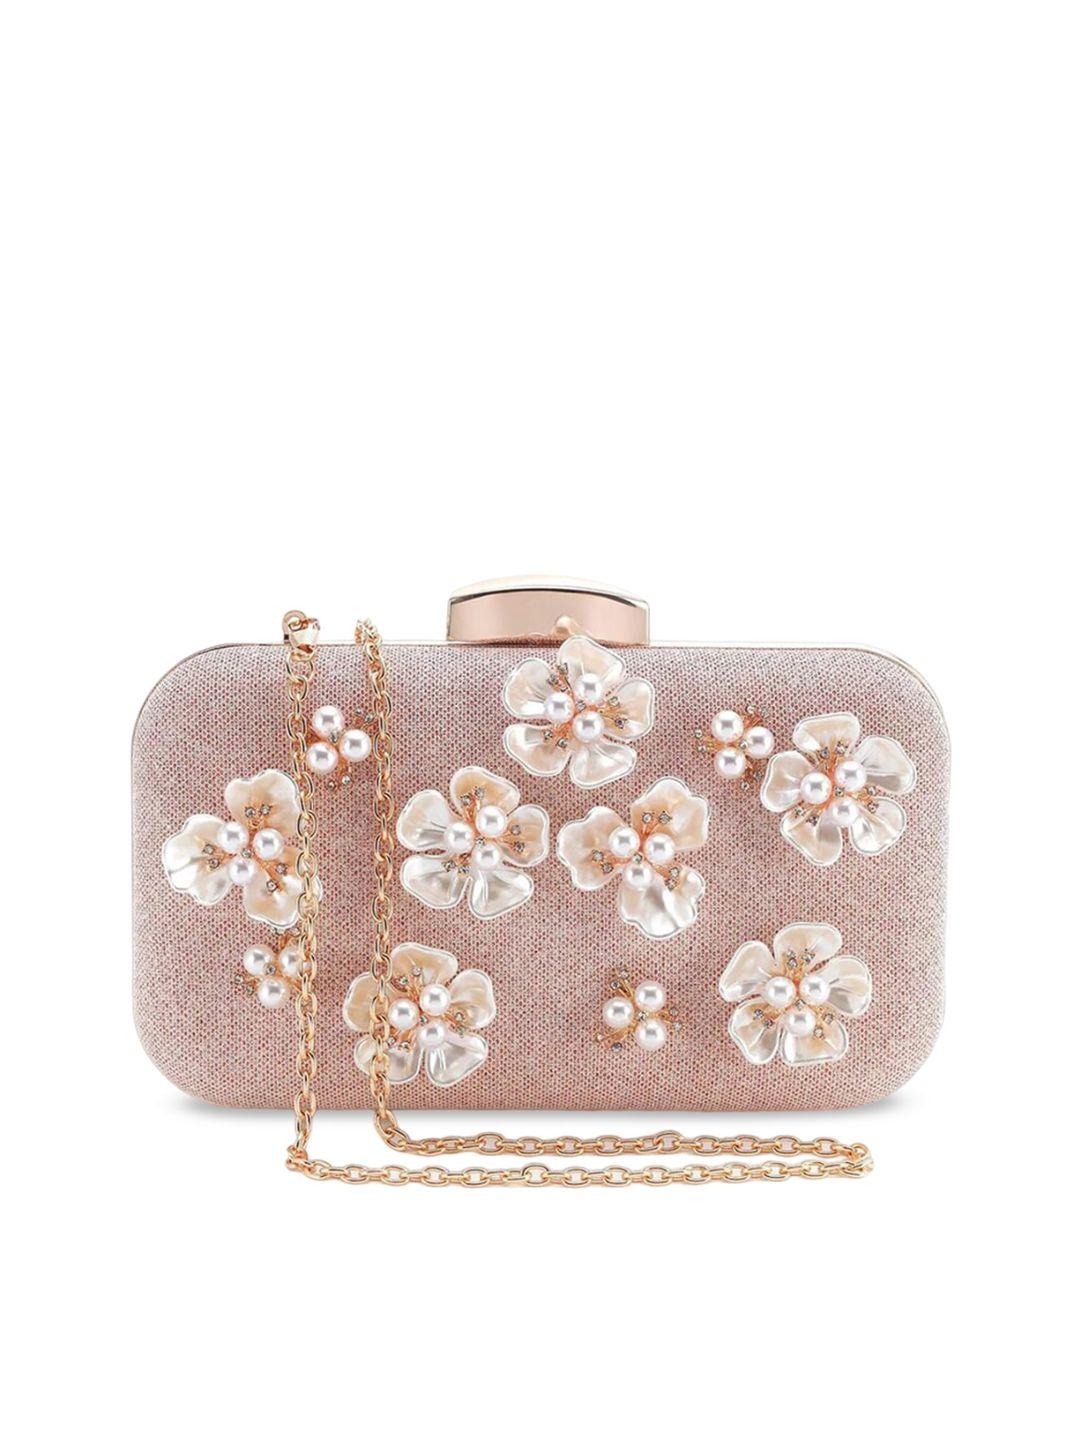 youbella floral embellished box clutch